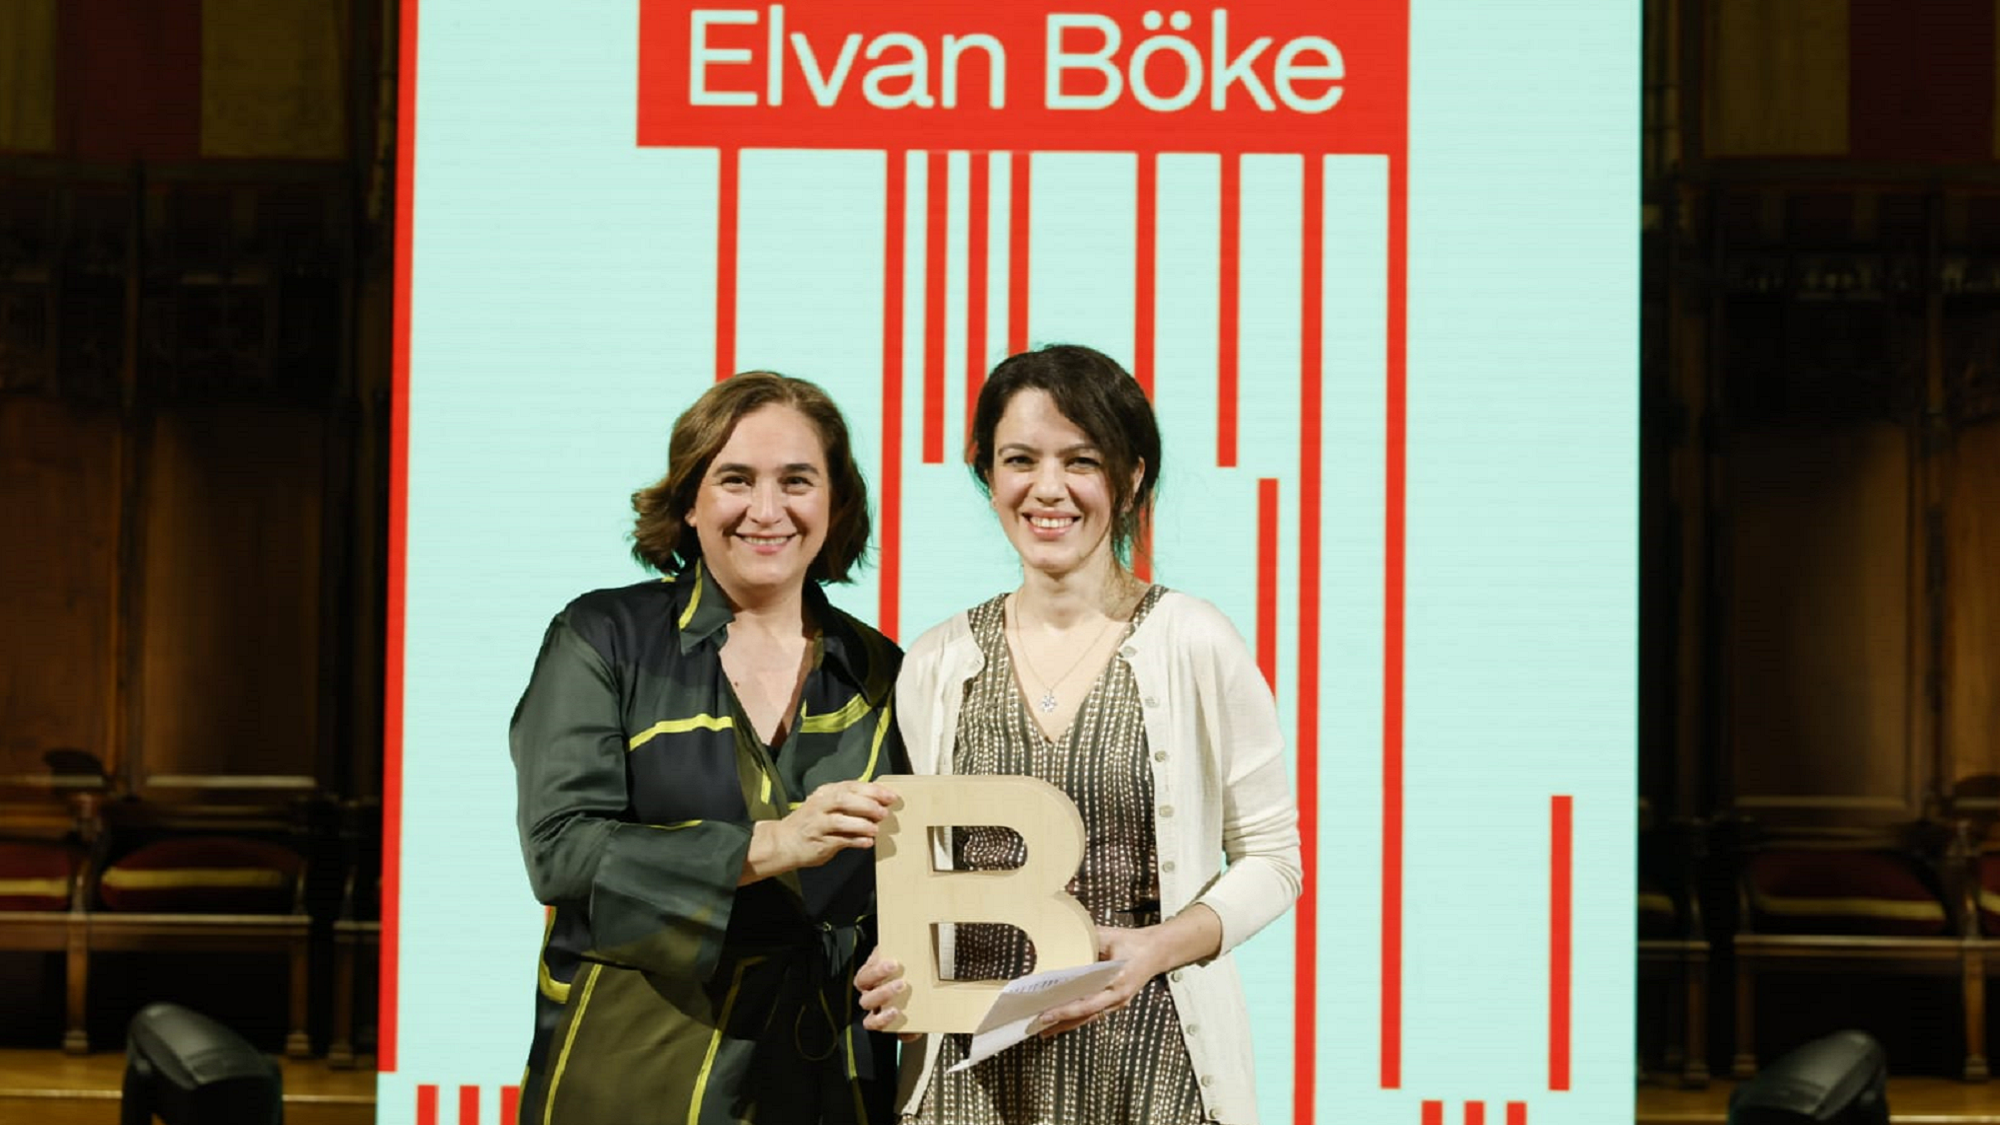 Elvan Böke receives the City of Barcelona Award and a 2 million euros grant